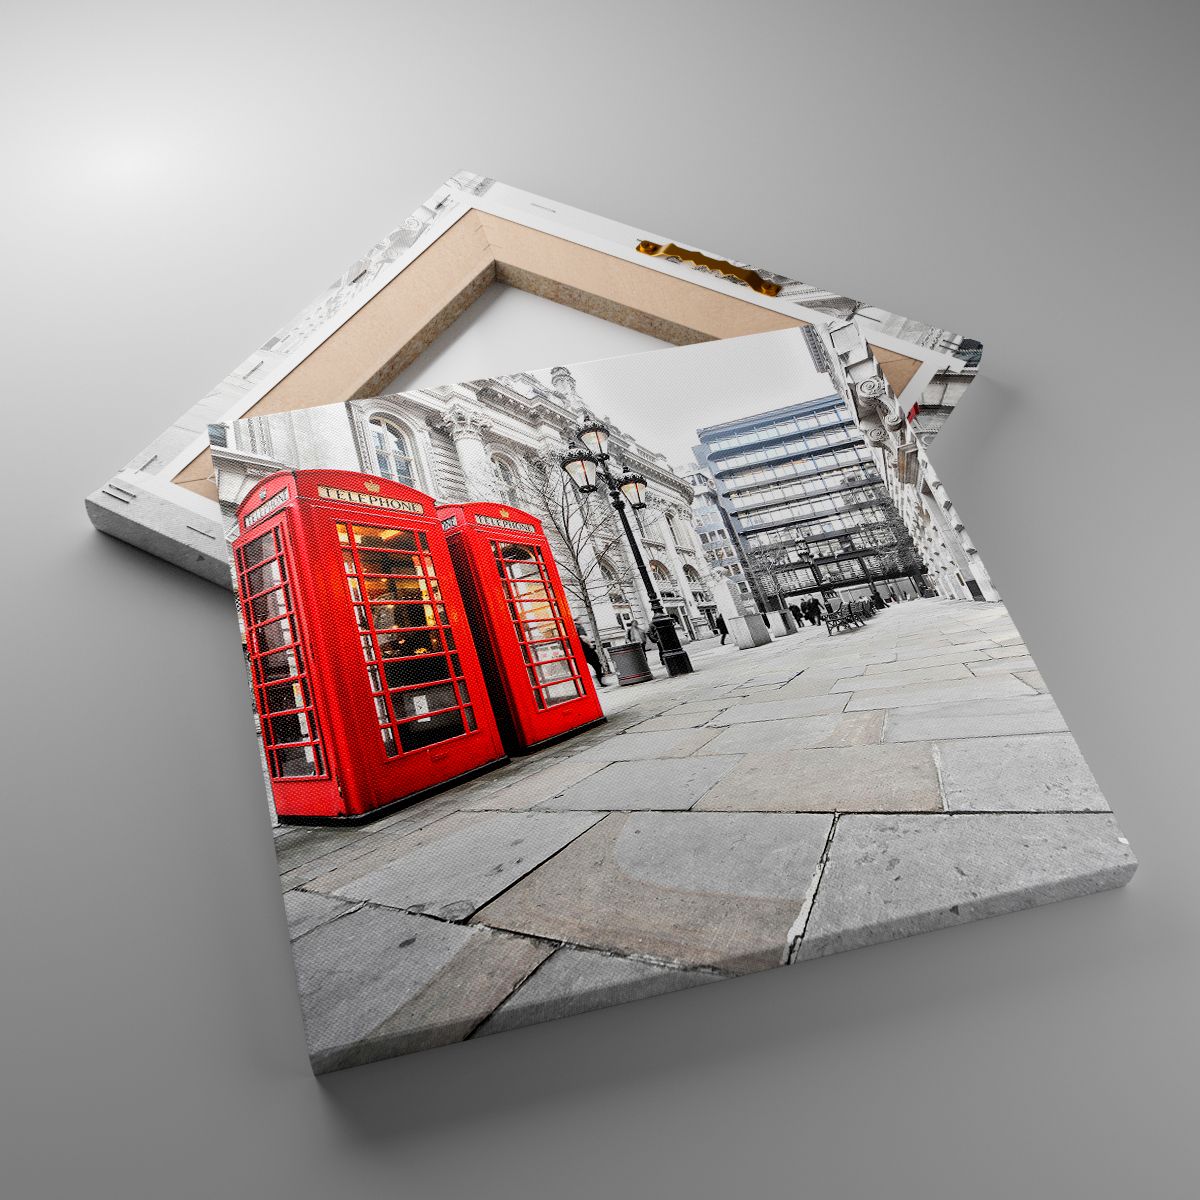 Leinwandbild Städte, Leinwandbild London, Leinwandbild Die Architektur, Leinwandbild Telefonzelle, Leinwandbild England